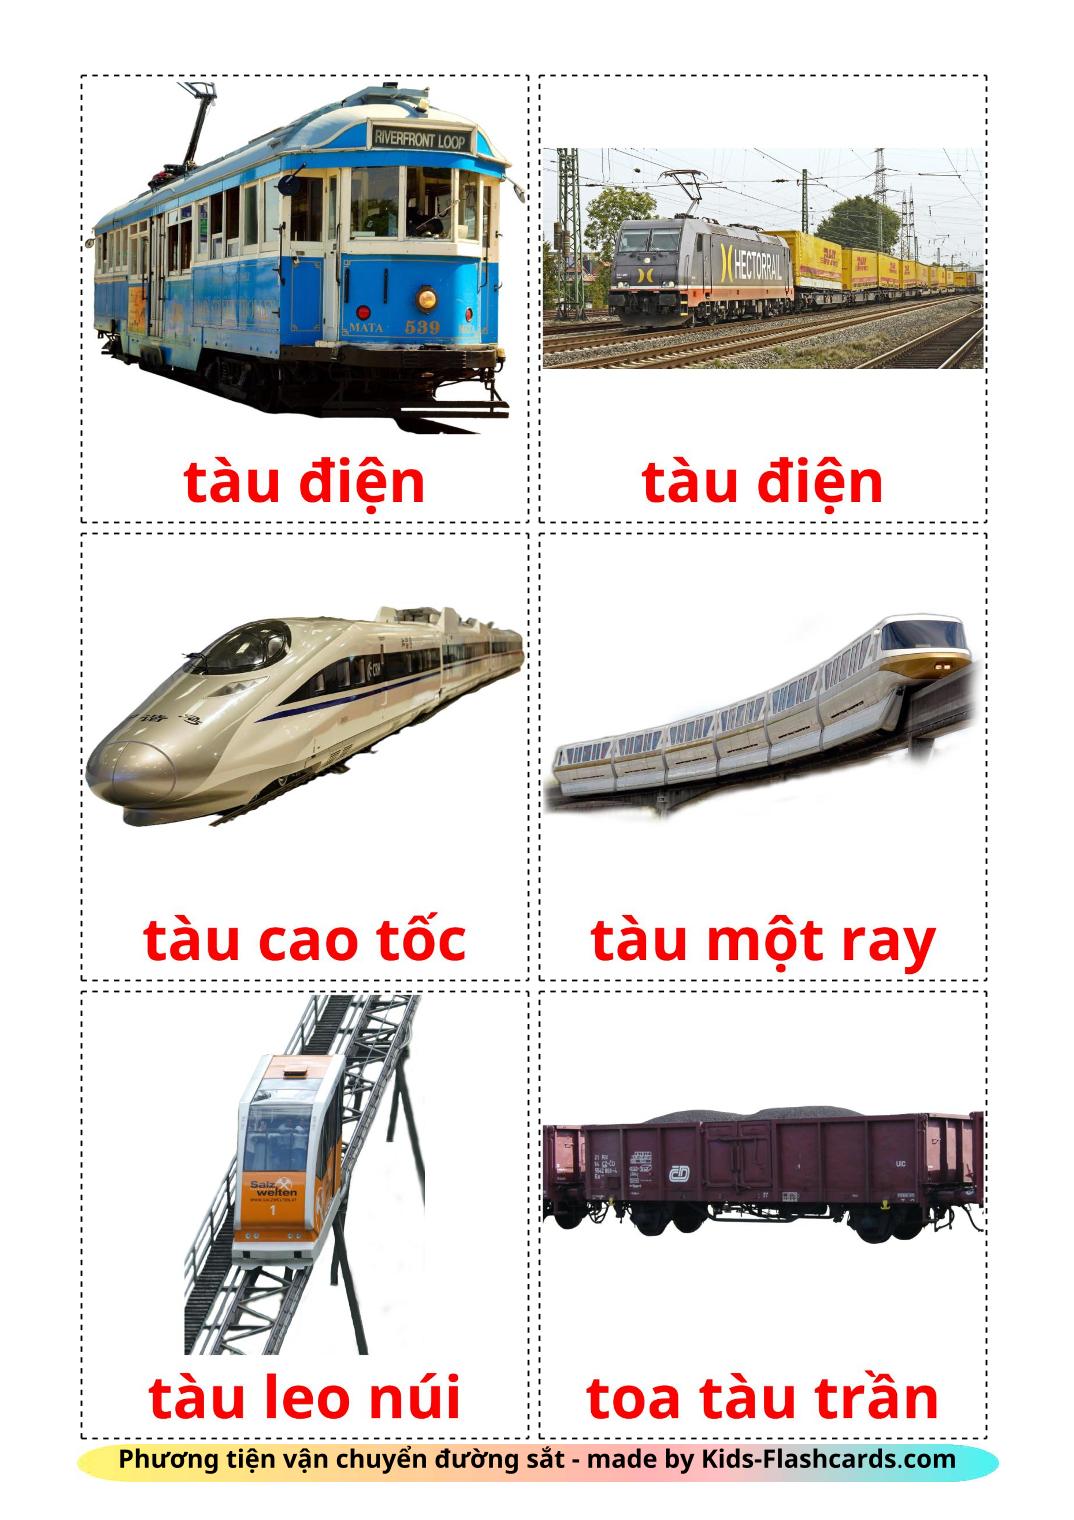 Transporte ferroviario - 18 fichas de vietnamita para imprimir gratis 